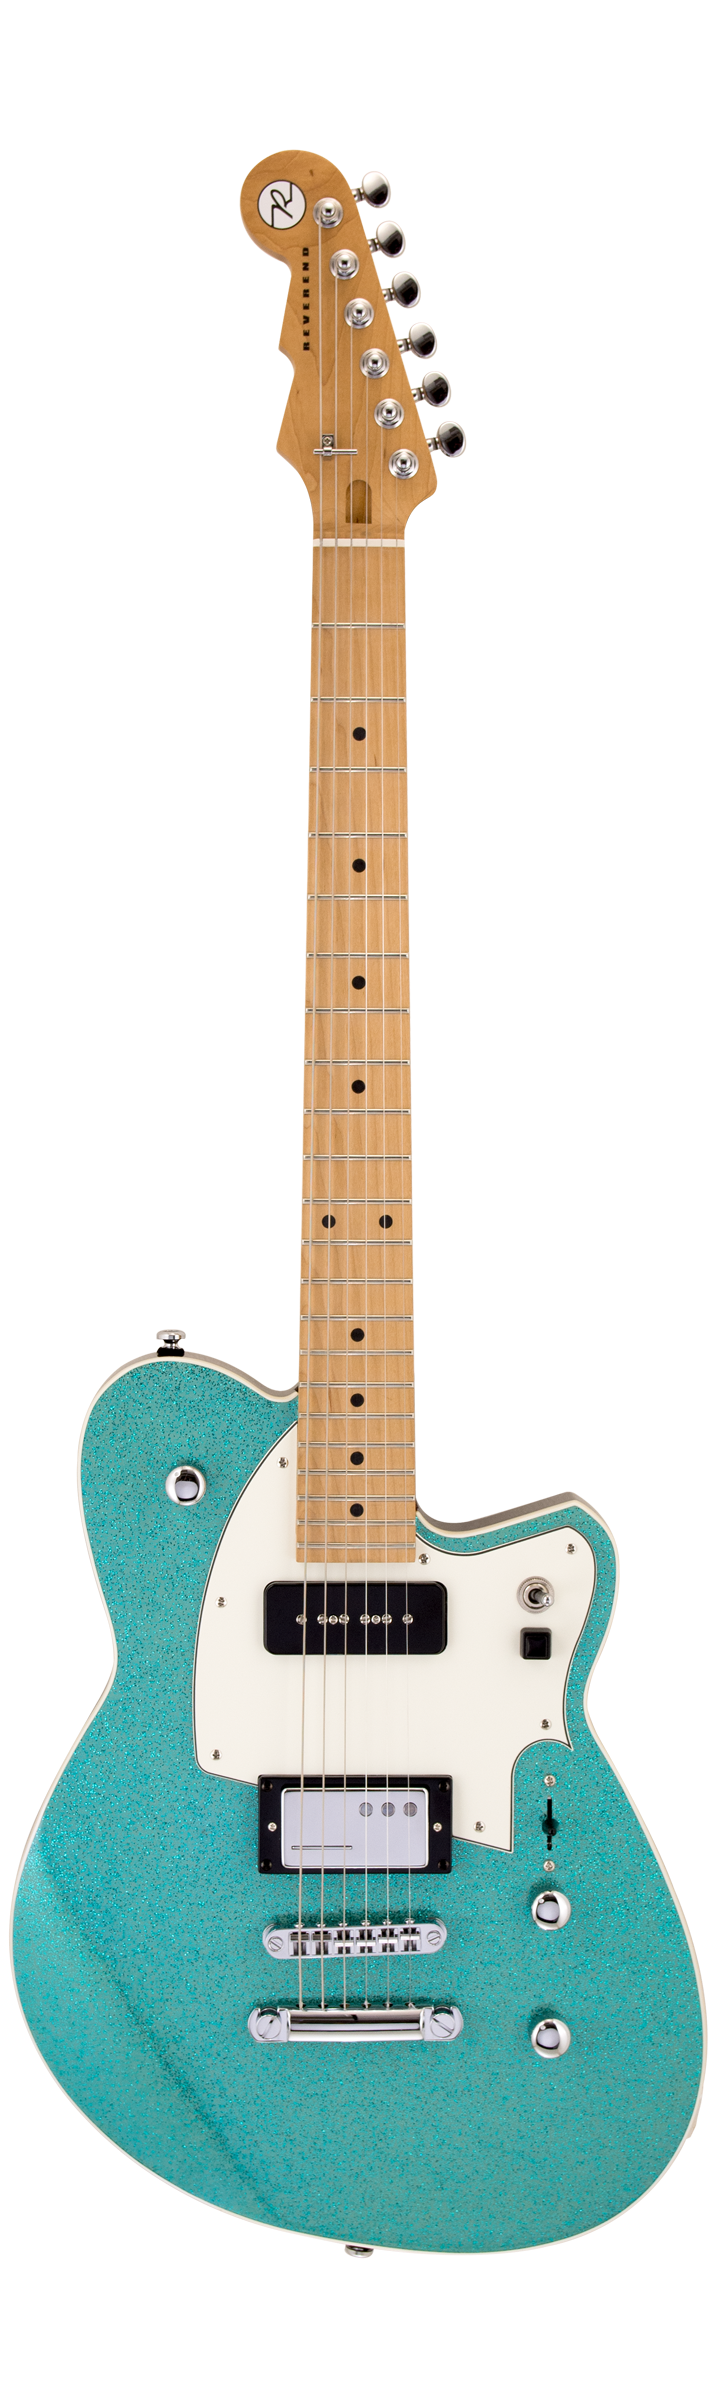 Reverend CHRIS FREEMAN Signature Electric Guitar (Turquoise Sparkle)